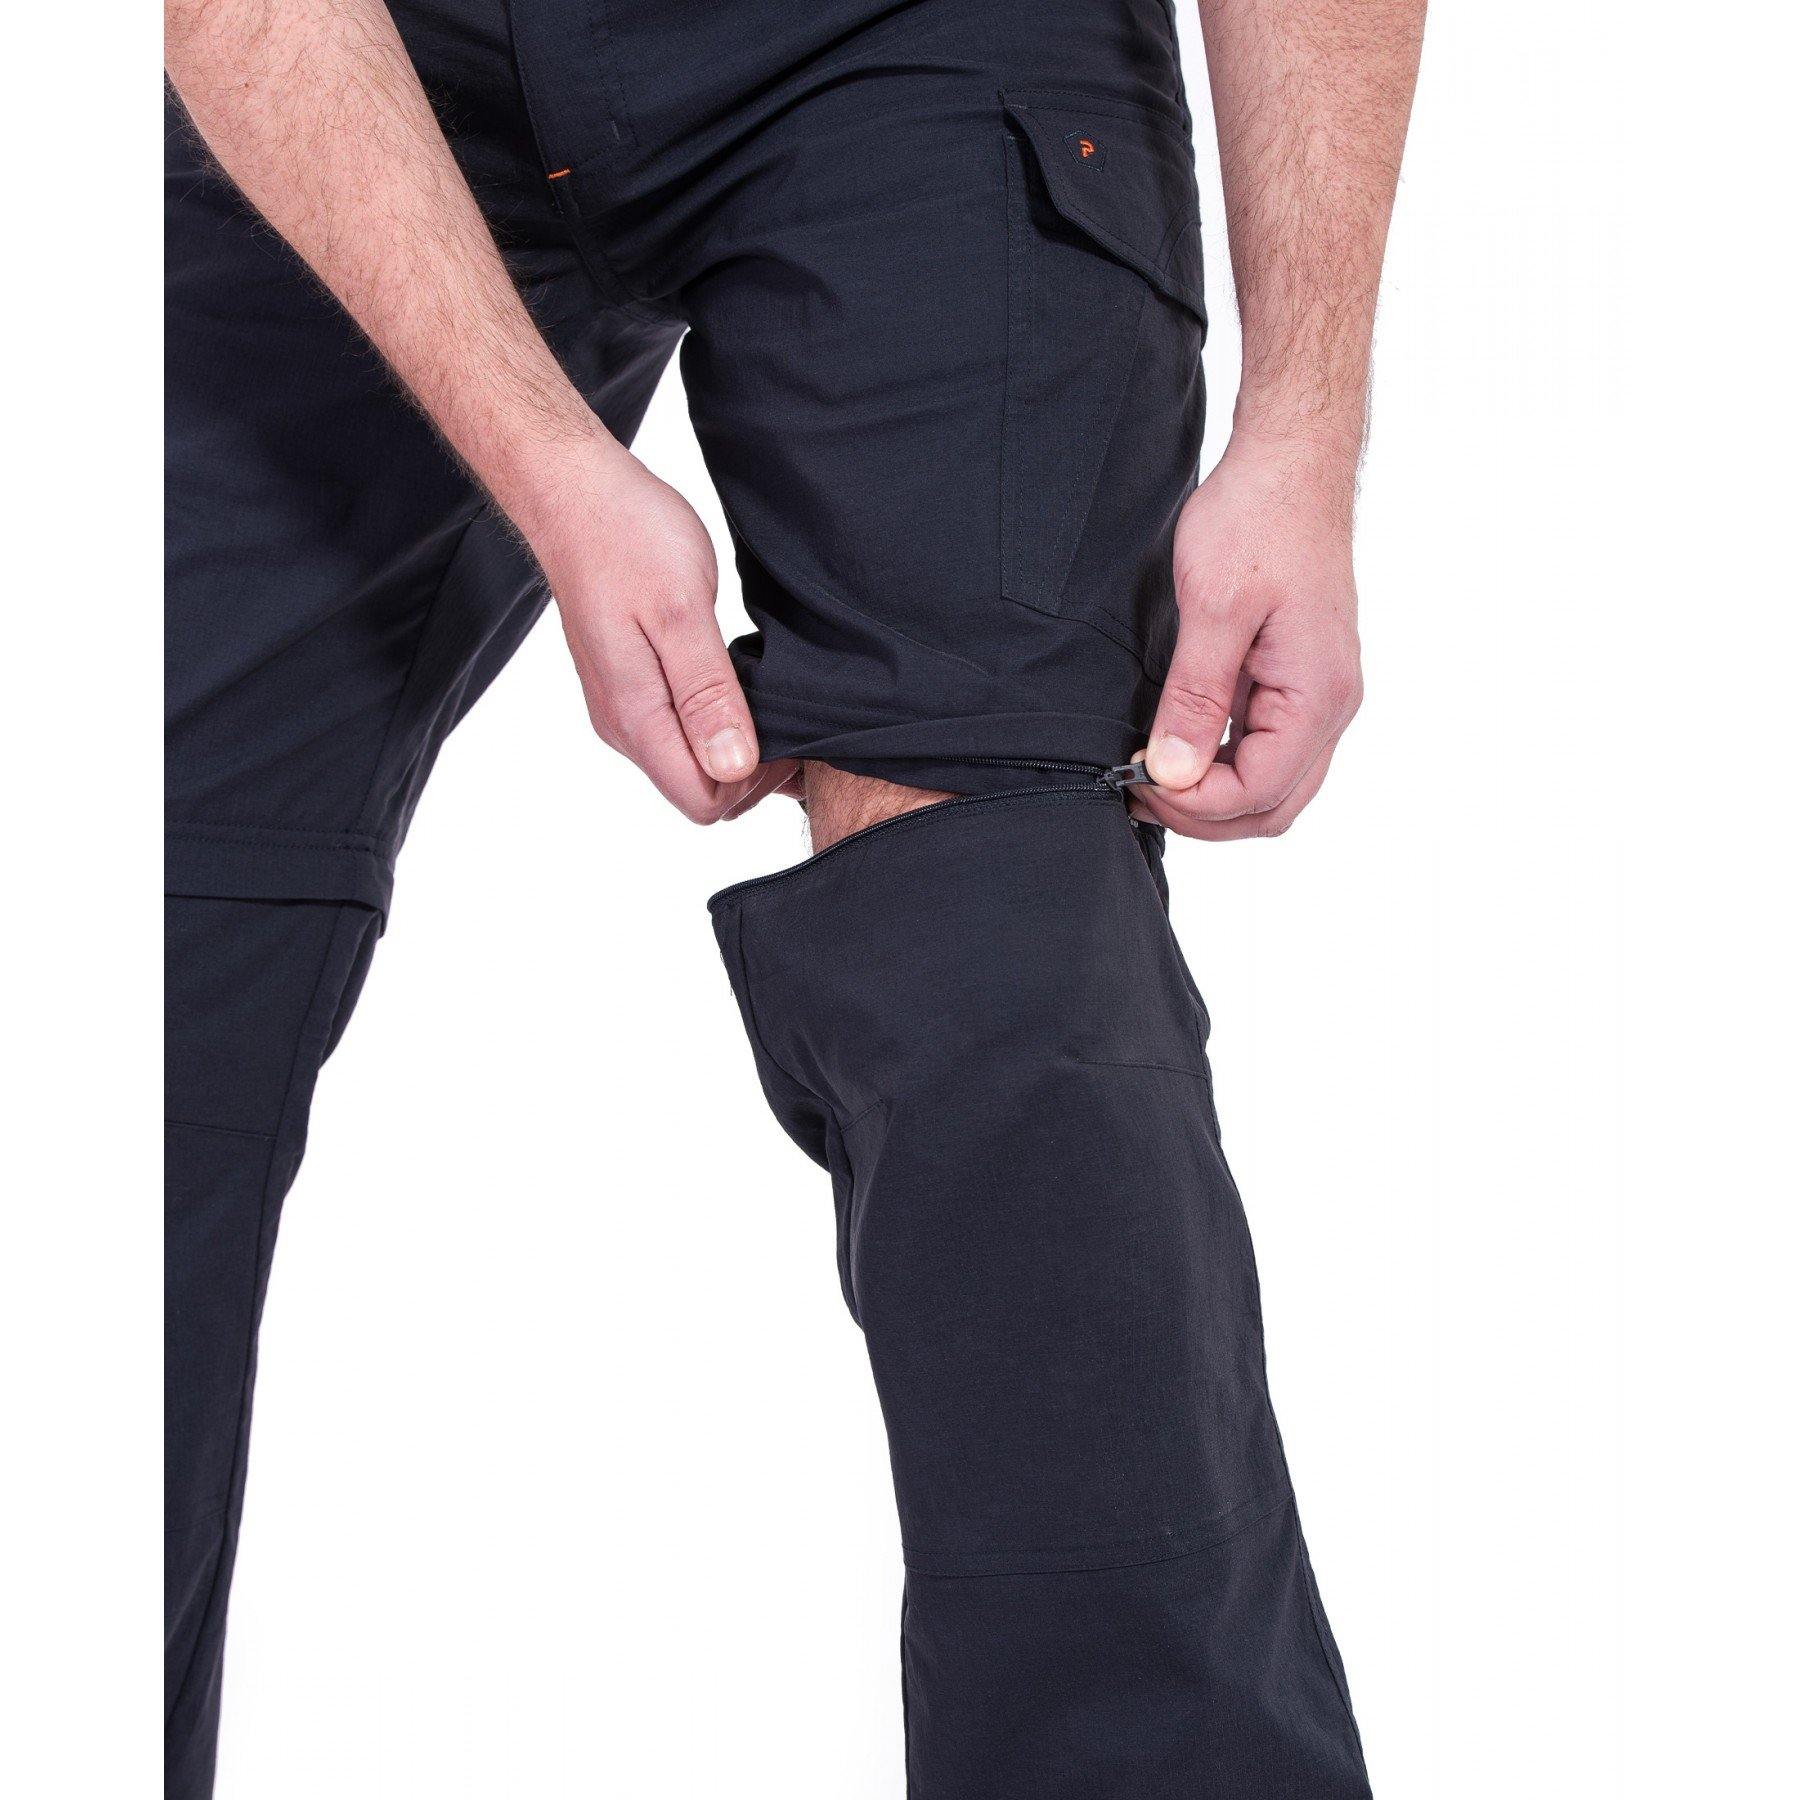 KRHINO Slacks for Men, Cargo Pants,Combat Tactical Cargo Pants Men Summer  Uniform Work Casual Travel Hiking Trekking Army Military Trousers (Size :  L-34) : Amazon.com.au: Clothing, Shoes & Accessories